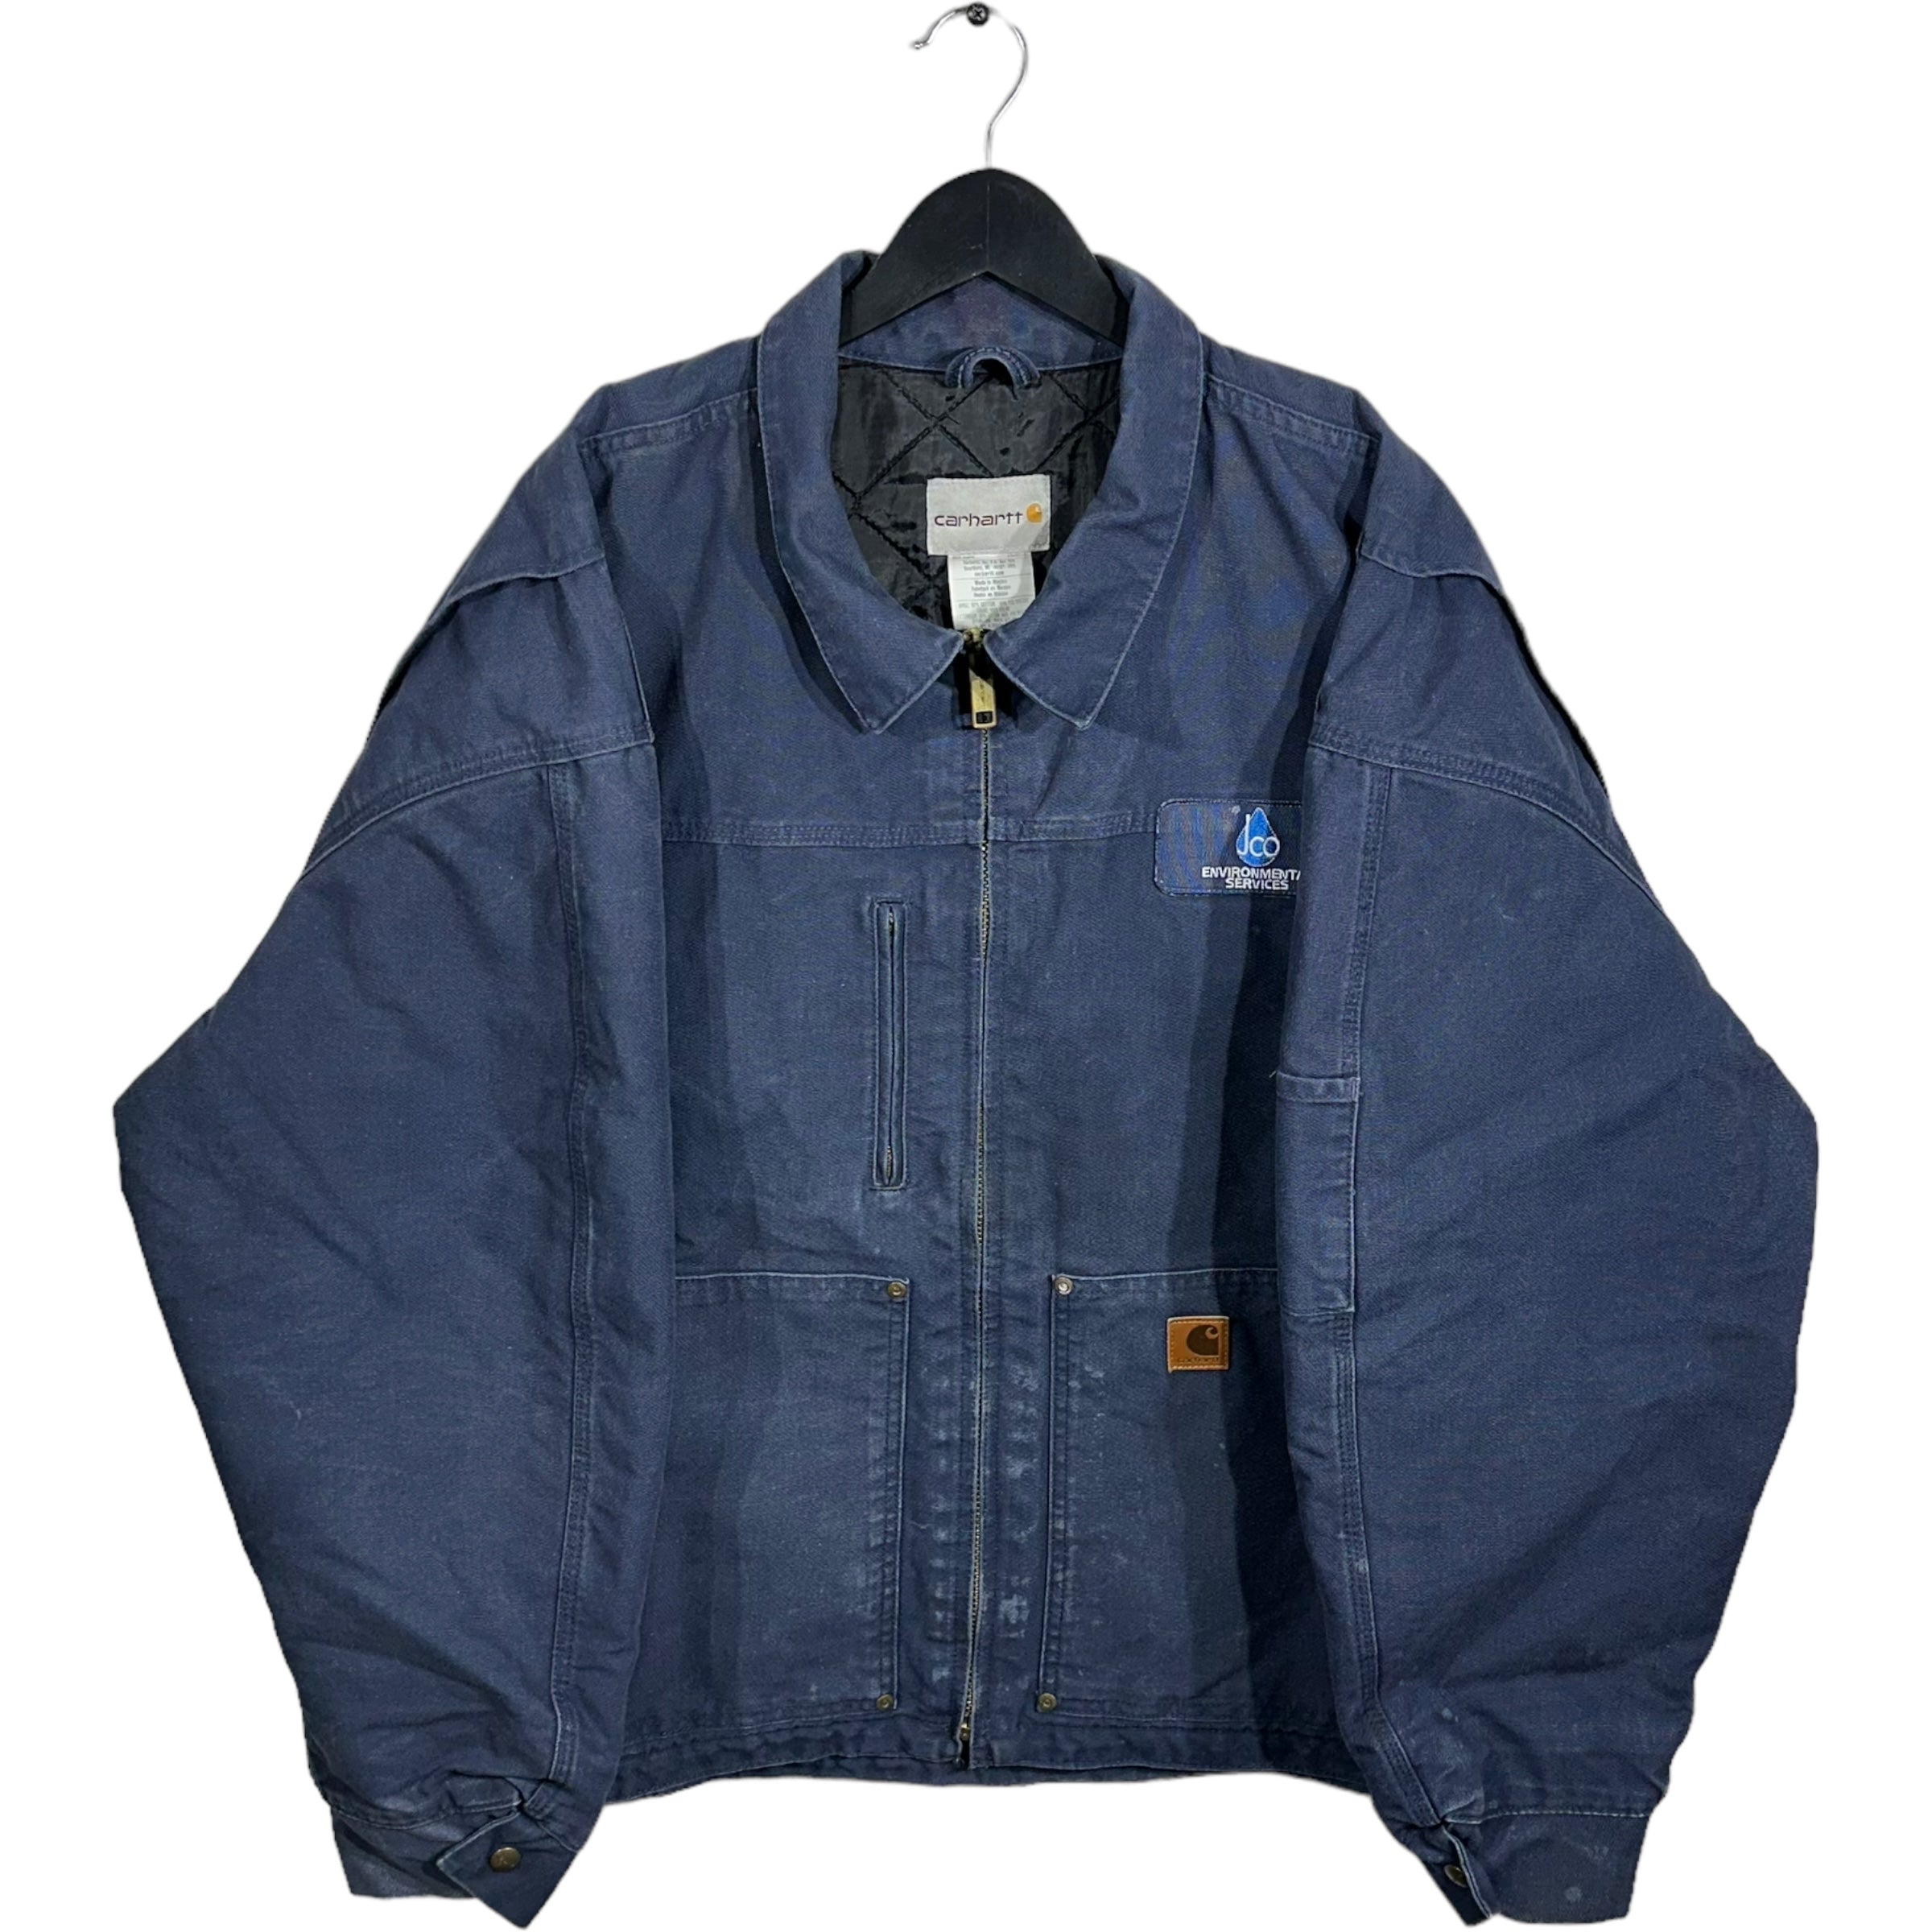 Vintage Carhartt "JCO Environmental Service" Workwear Jacket